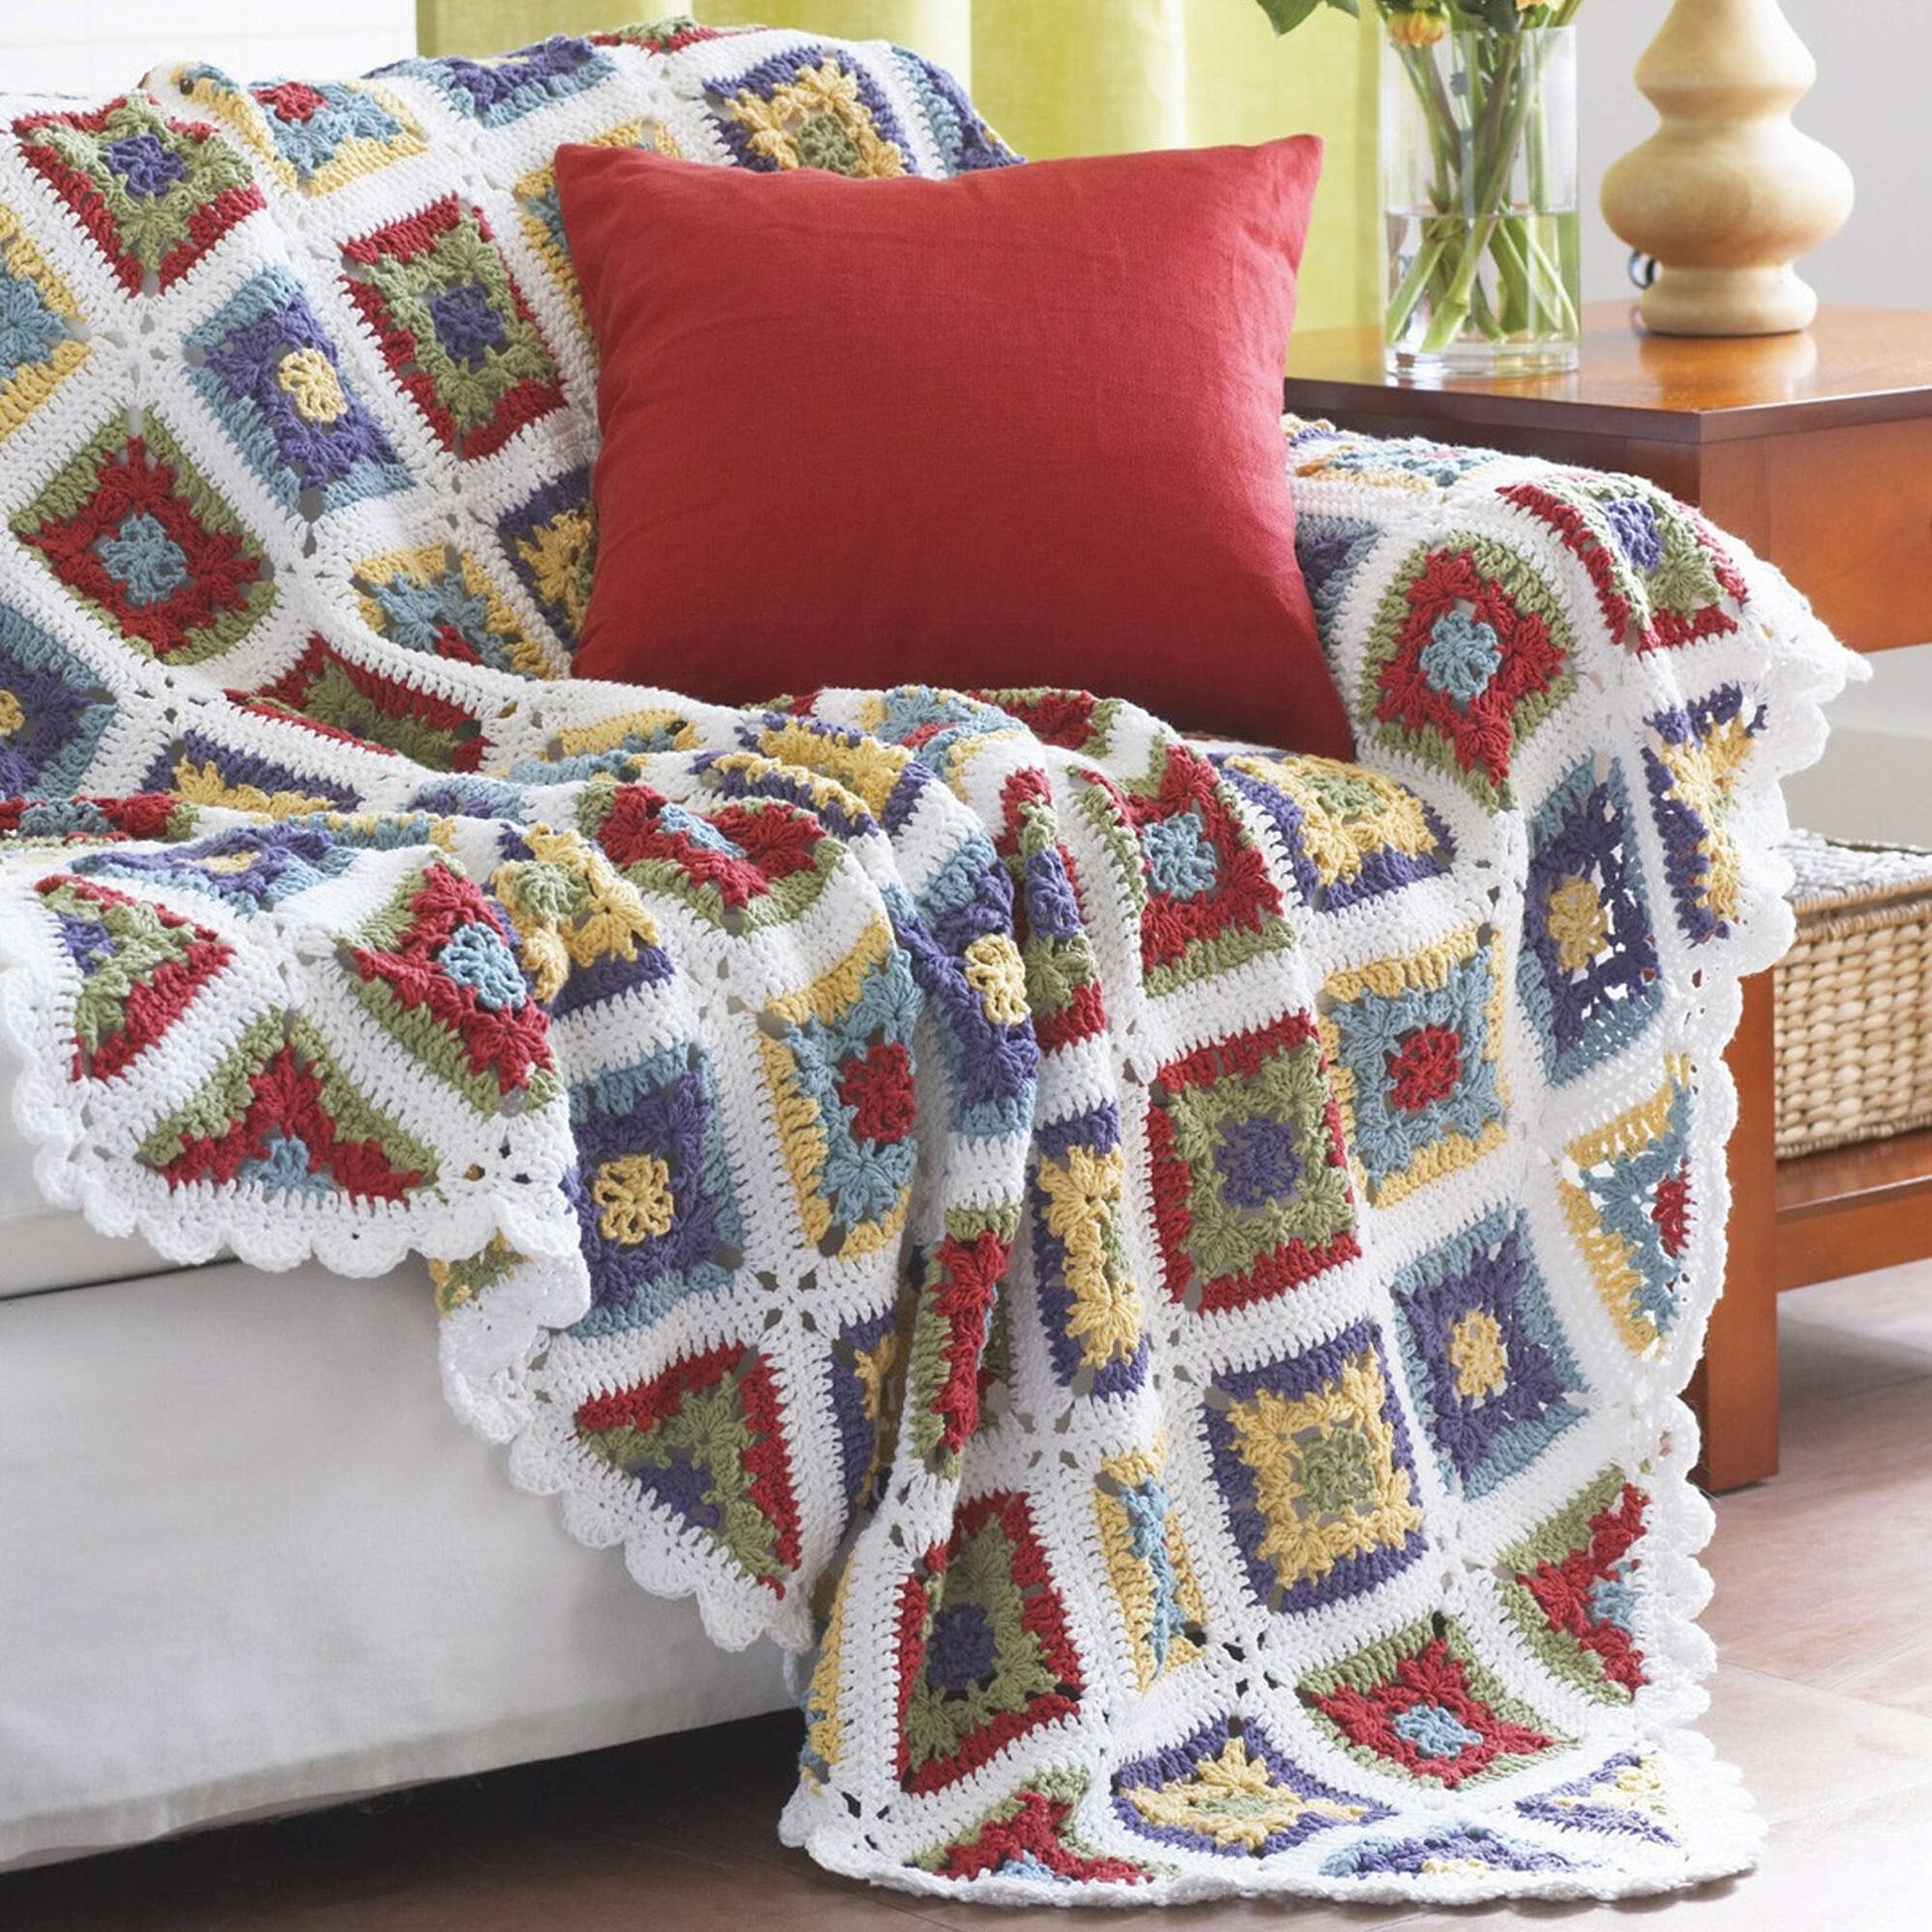 Free Lily Sugar 'n Cream Country Granny Crochet Blanket Pattern